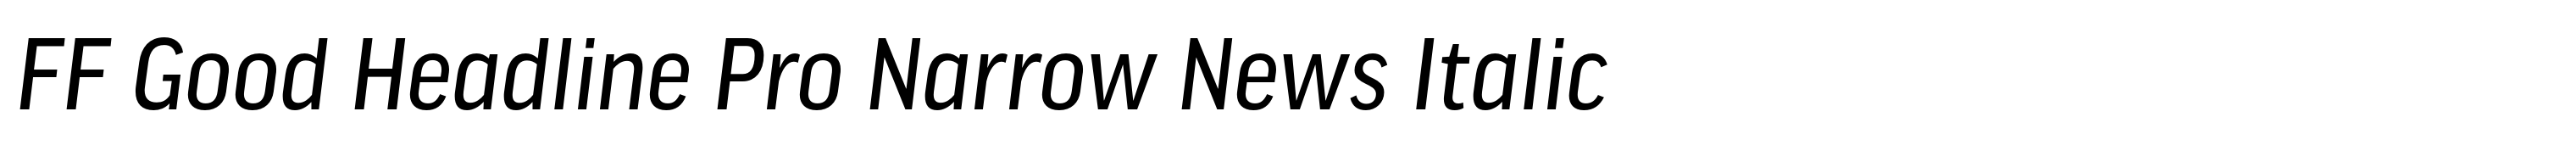 FF Good Headline Pro Narrow News Italic